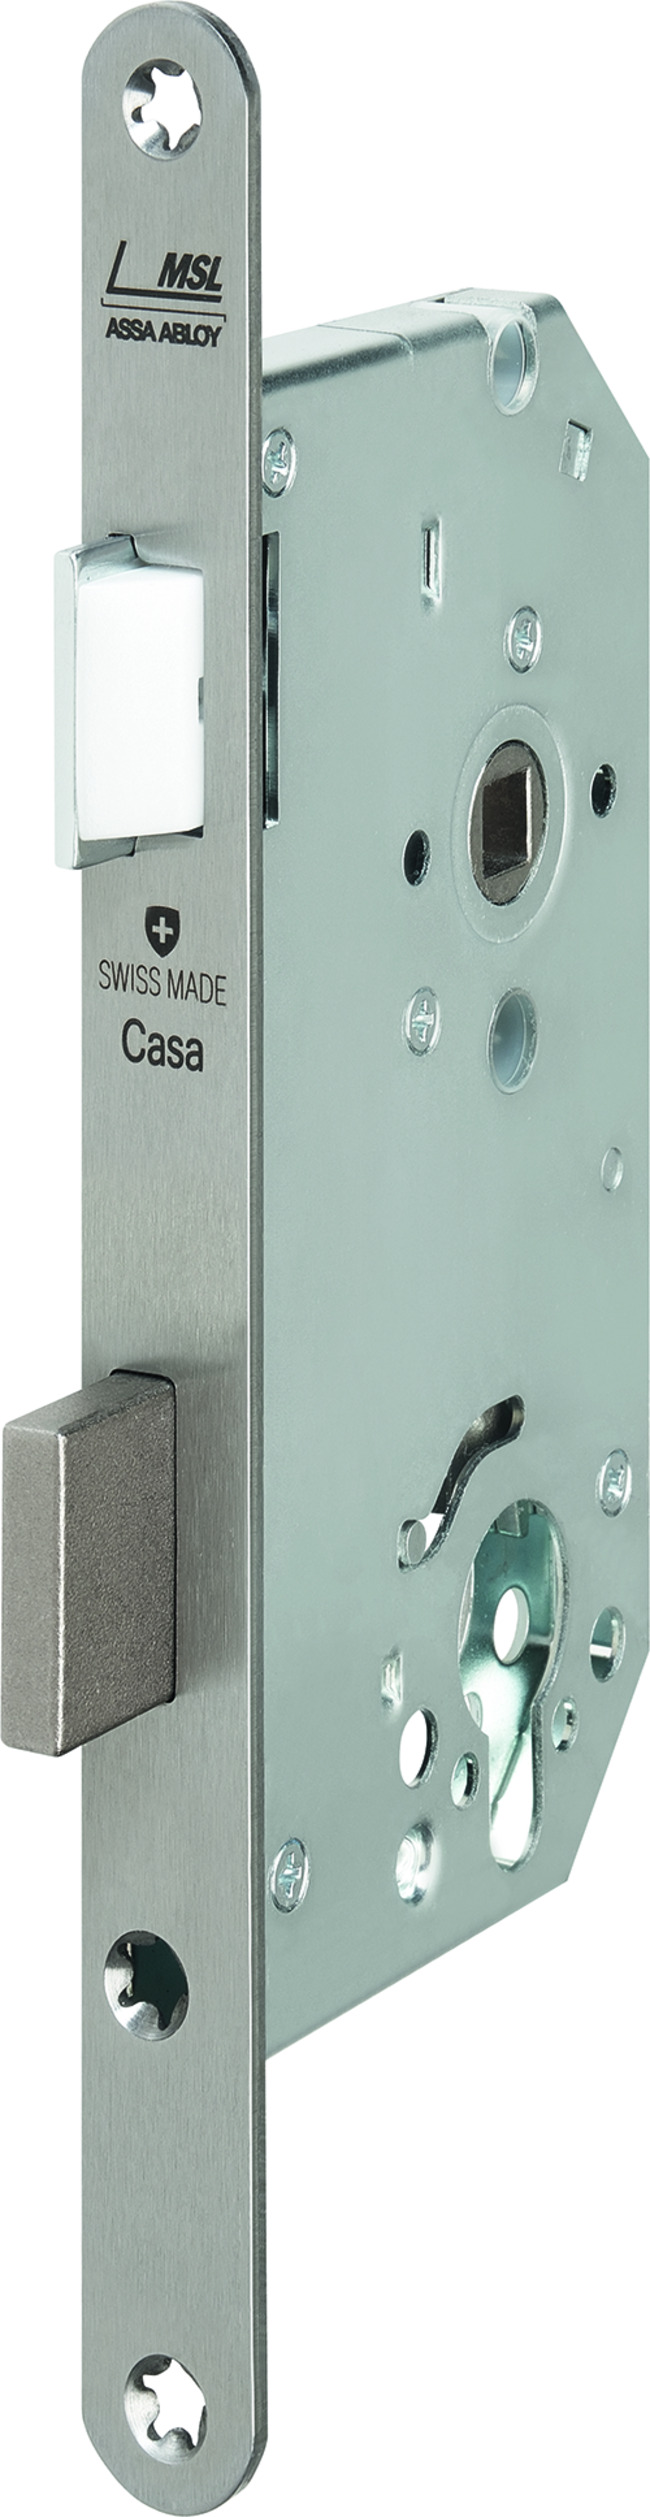 CASA Beta Security mortise lock 1123